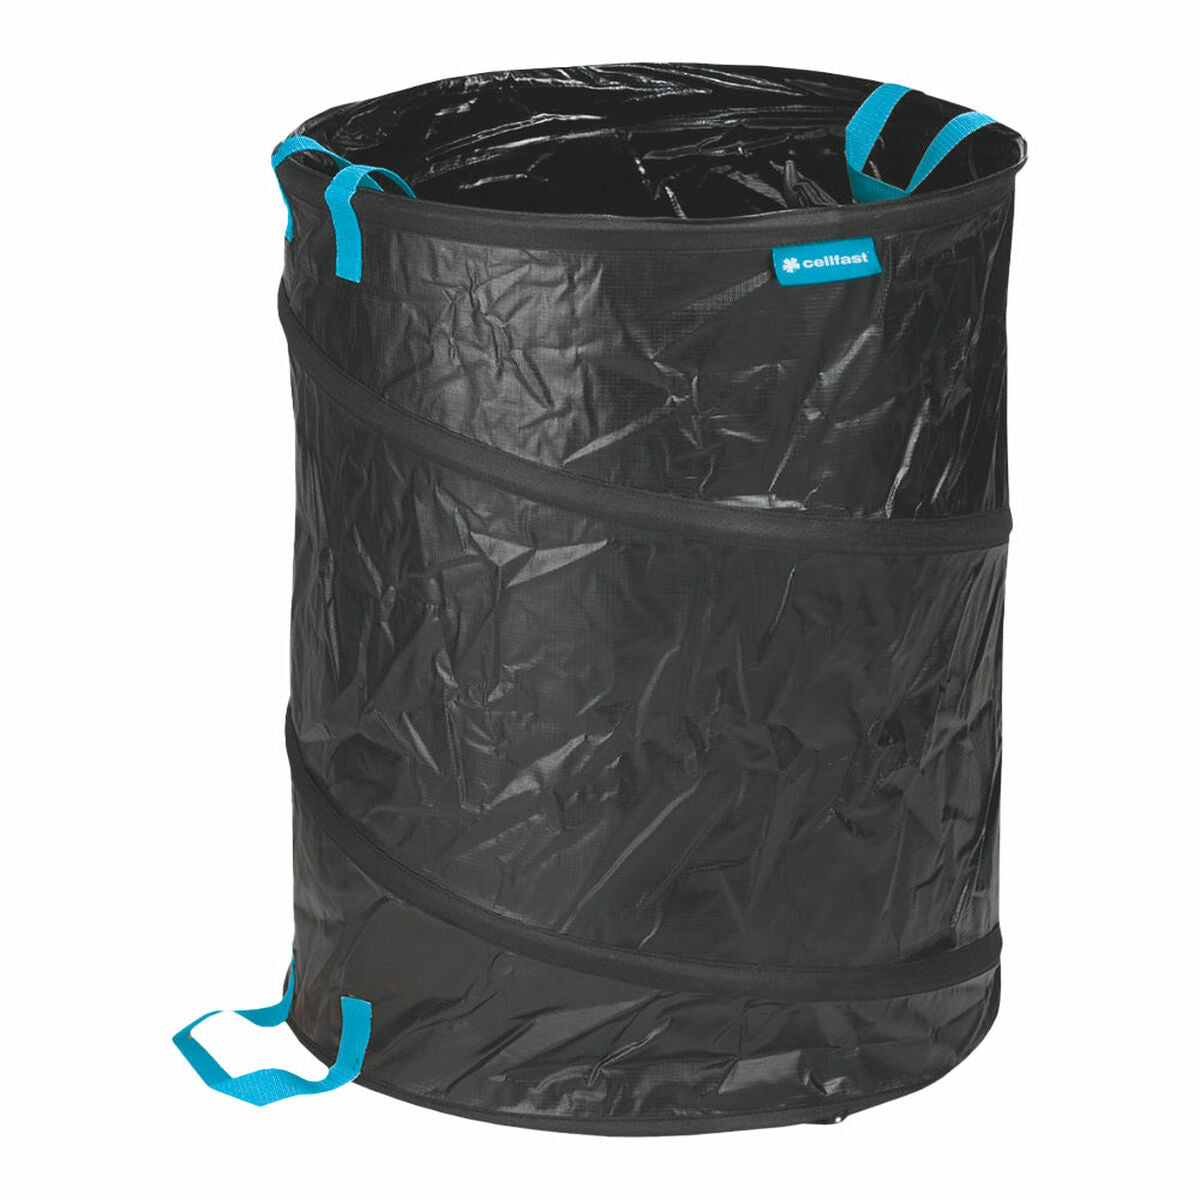 Garden waste bag Cellfast Pop Up Nylon Steel 40 x 40 x 48 cm Foldable